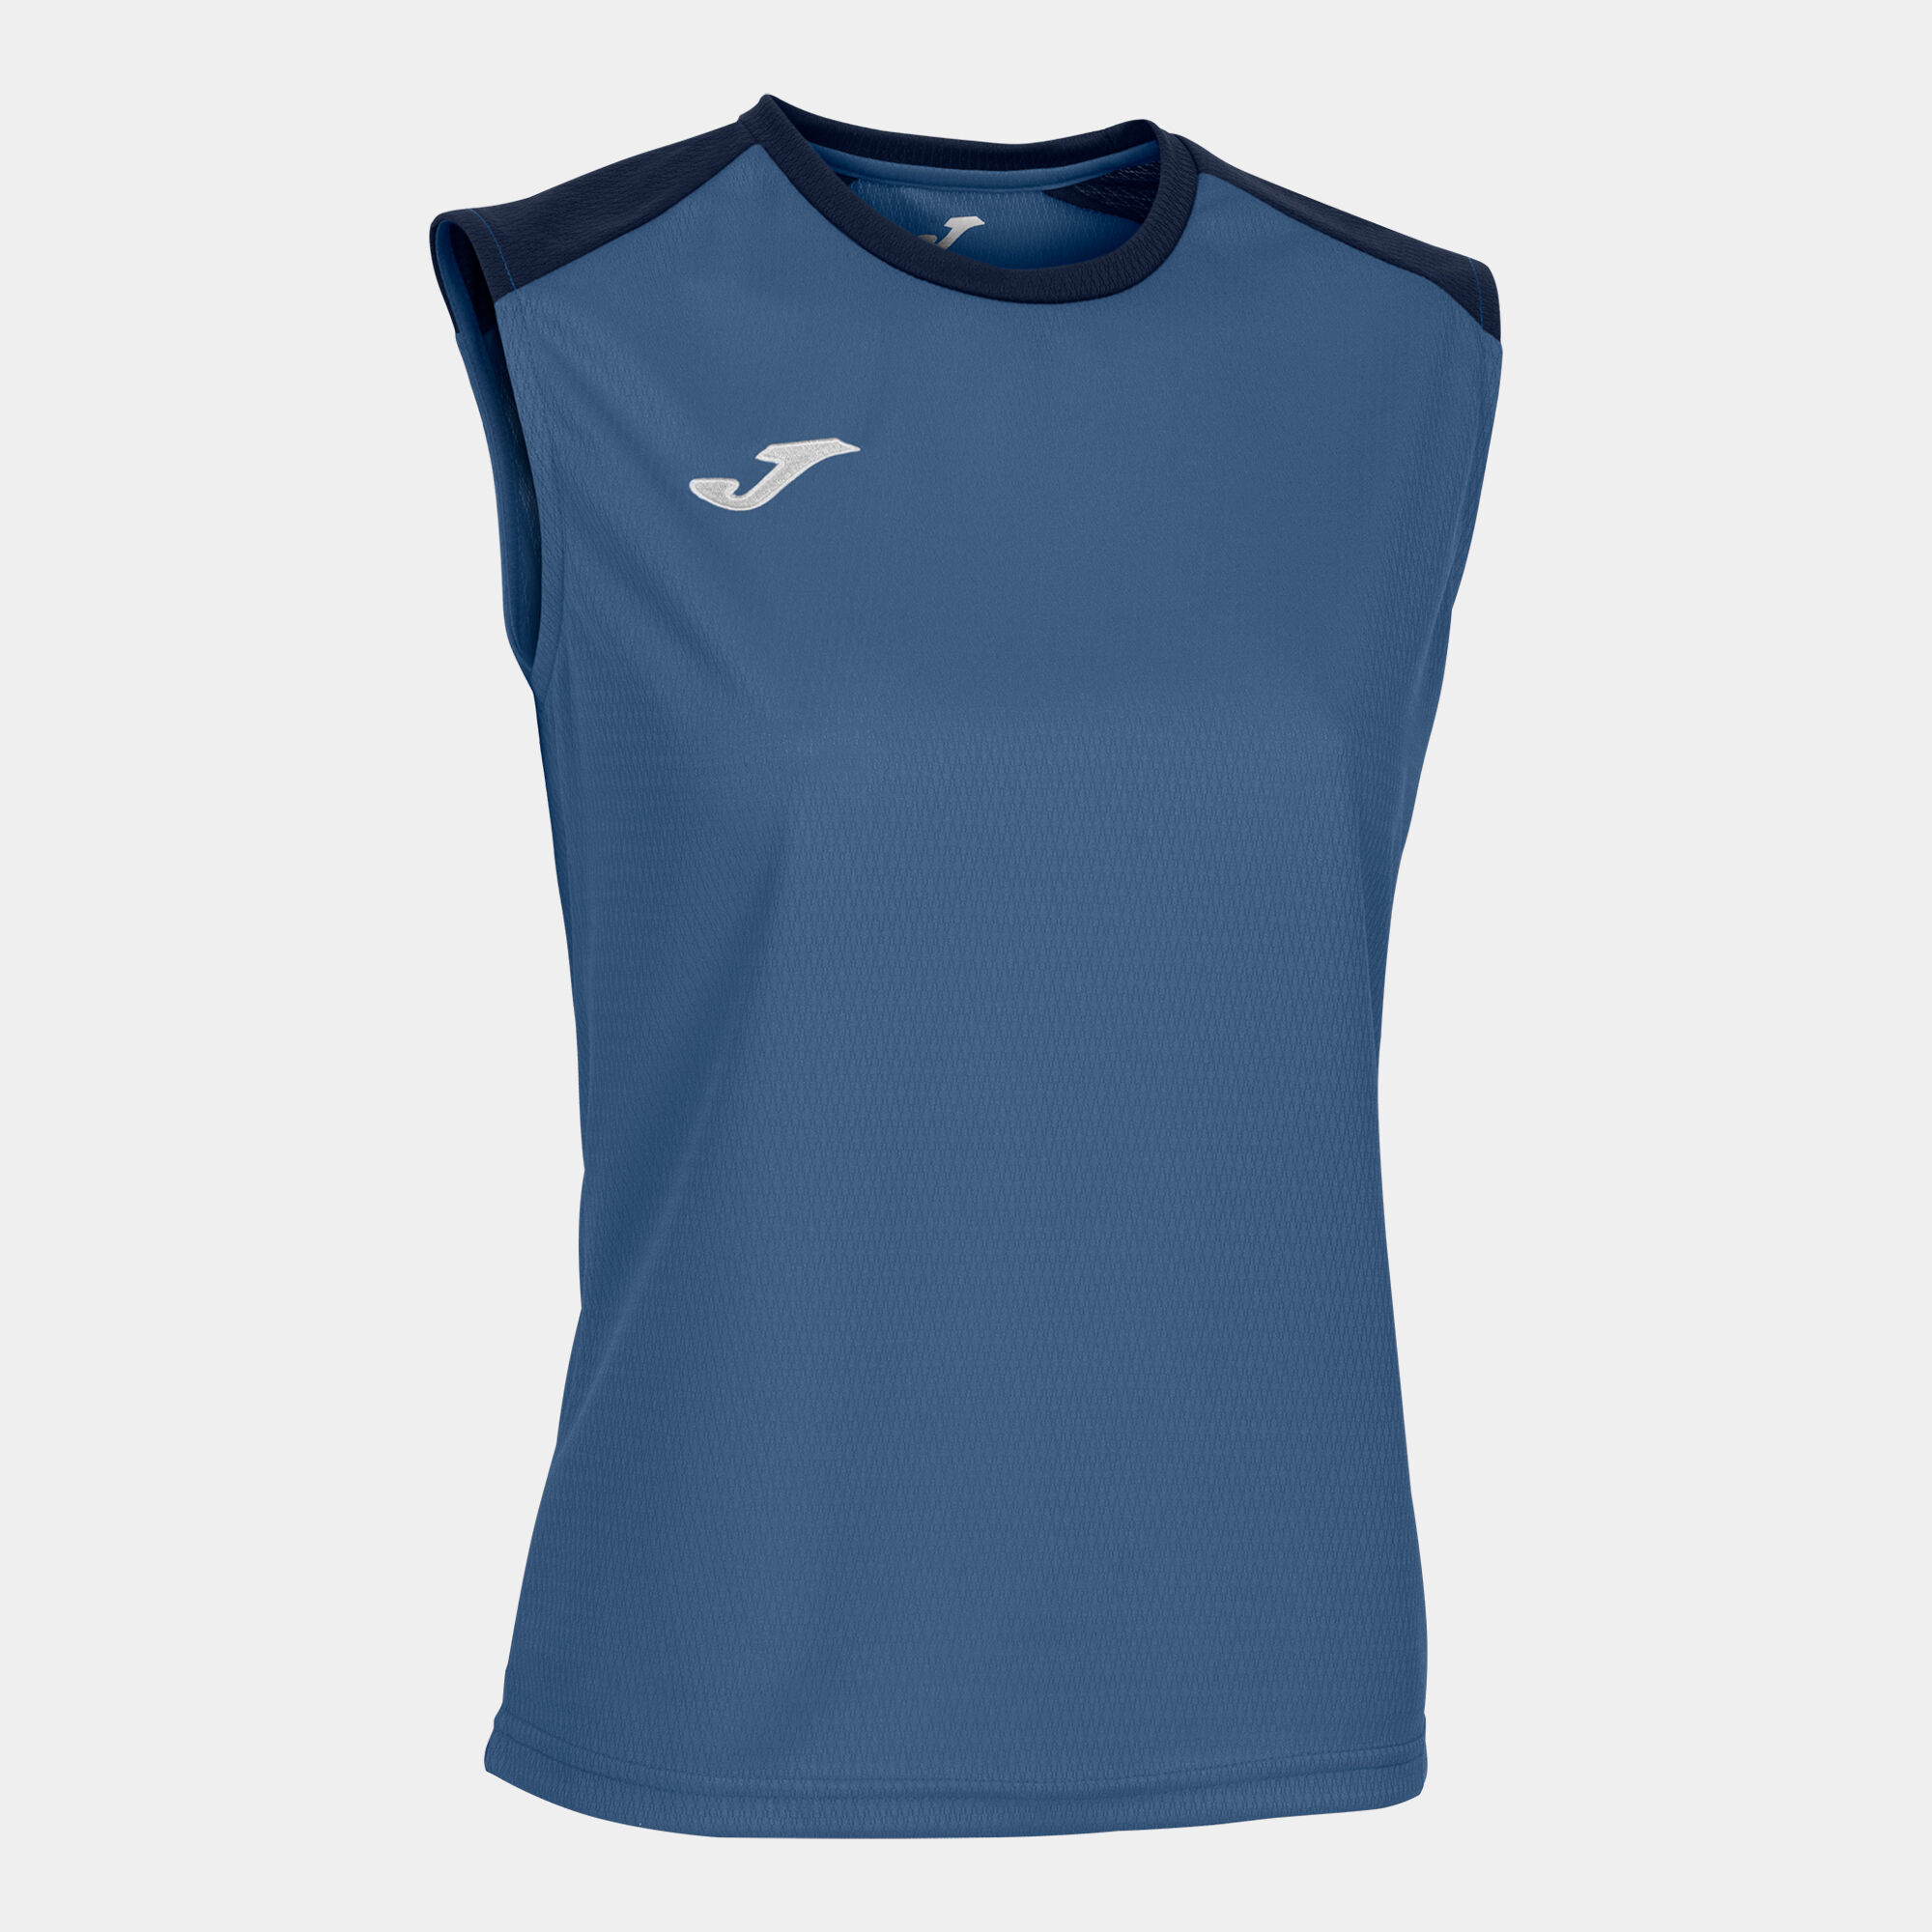 Camiseta tirantes mujer Eco Championship azul marino